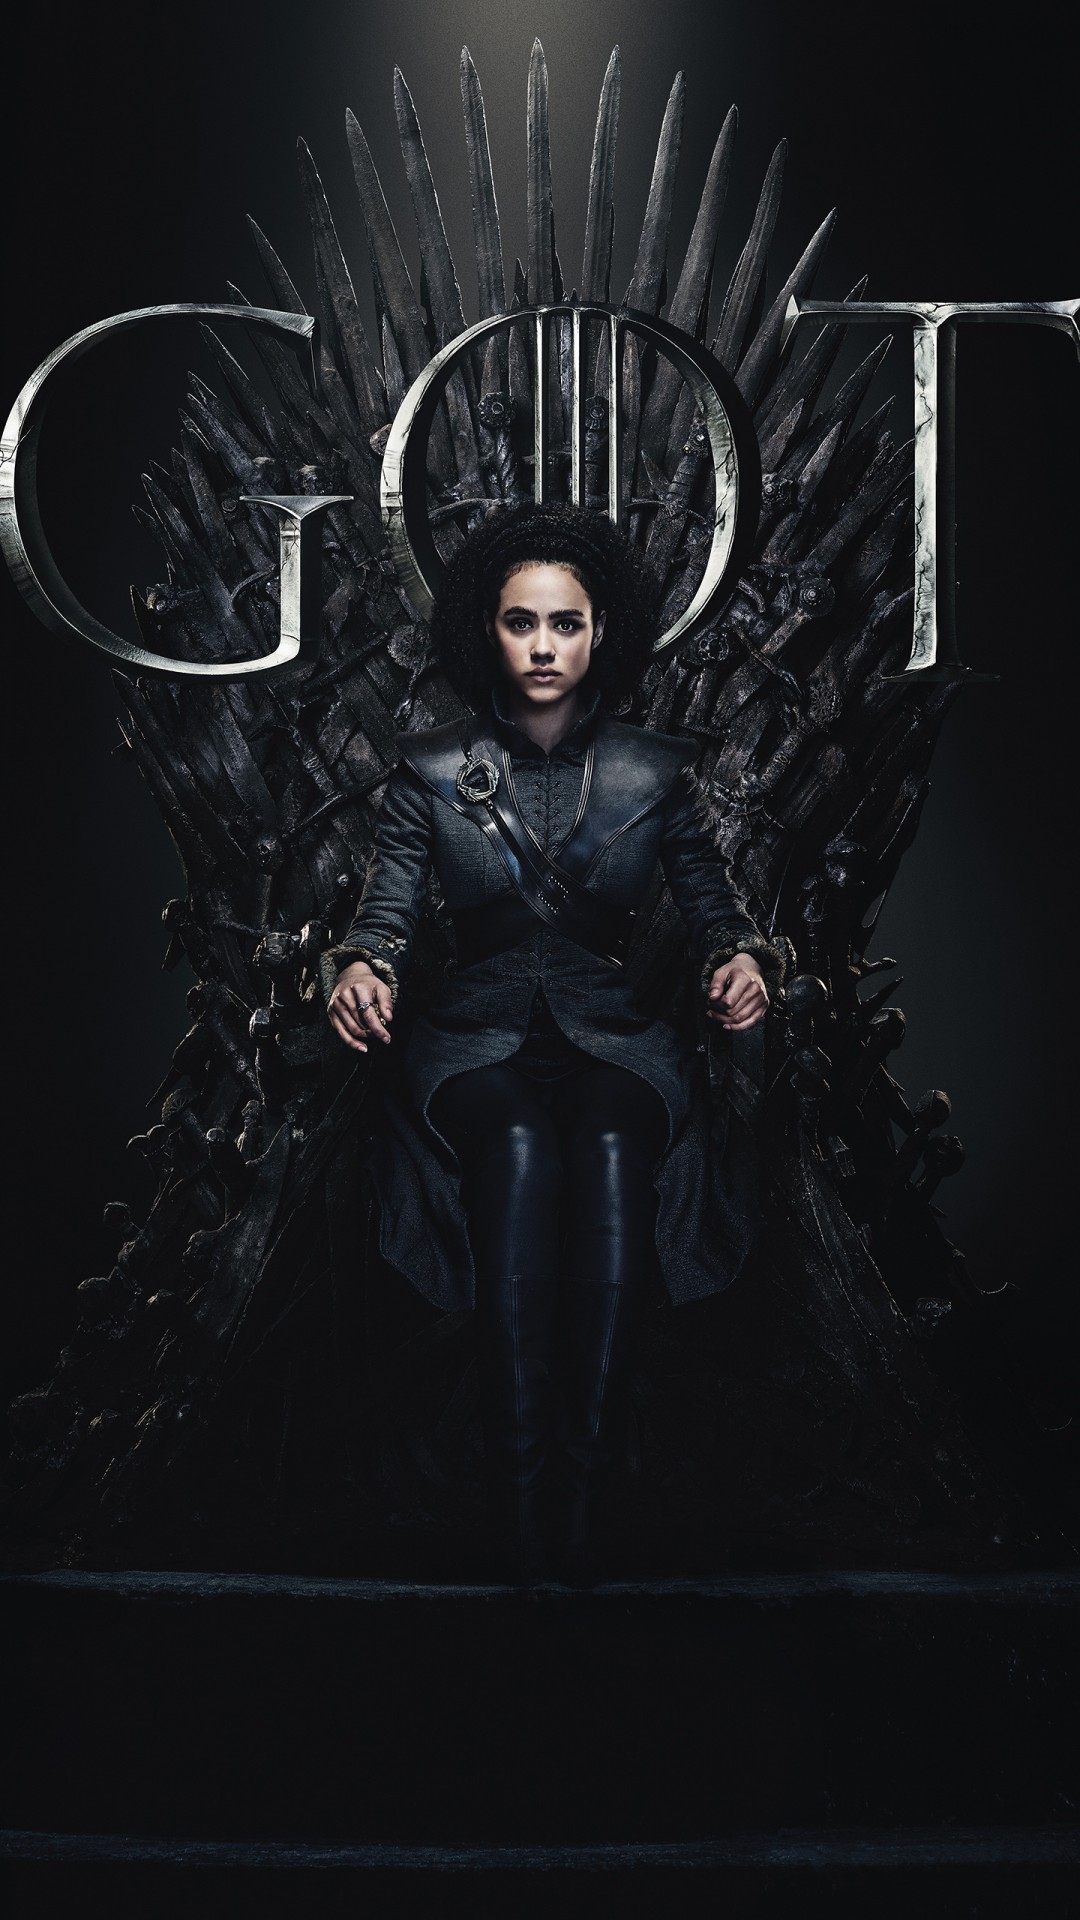 juego de tronos temporada 6 fondo de pantalla,oscuridad,moda,portada del álbum,silla,moda gótica